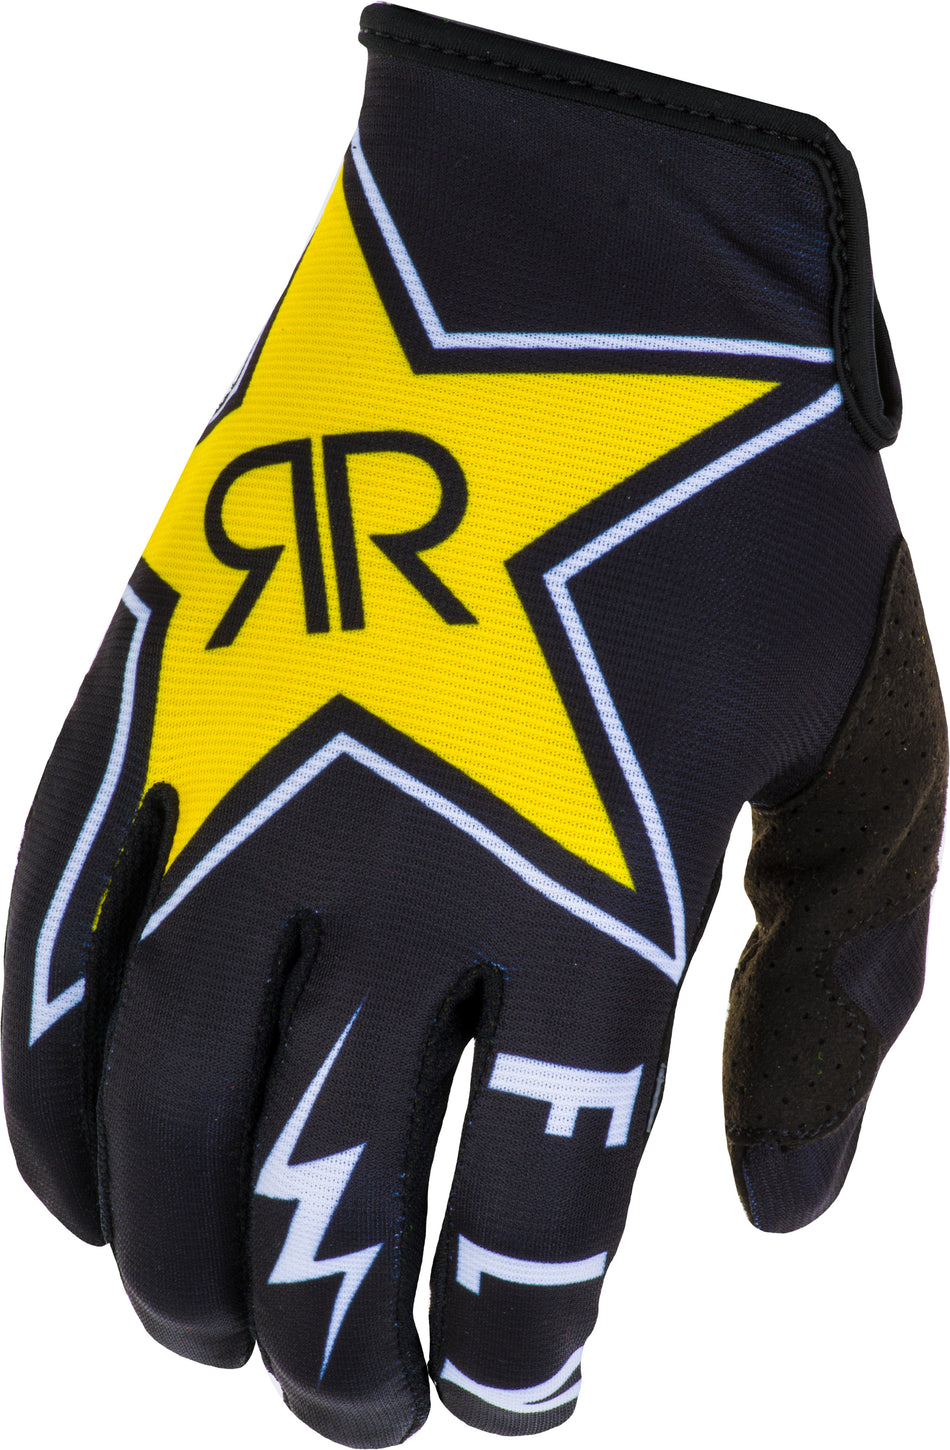 FLY RACING Lite Rockstar Gloves Black/White Sz 09 373-01309